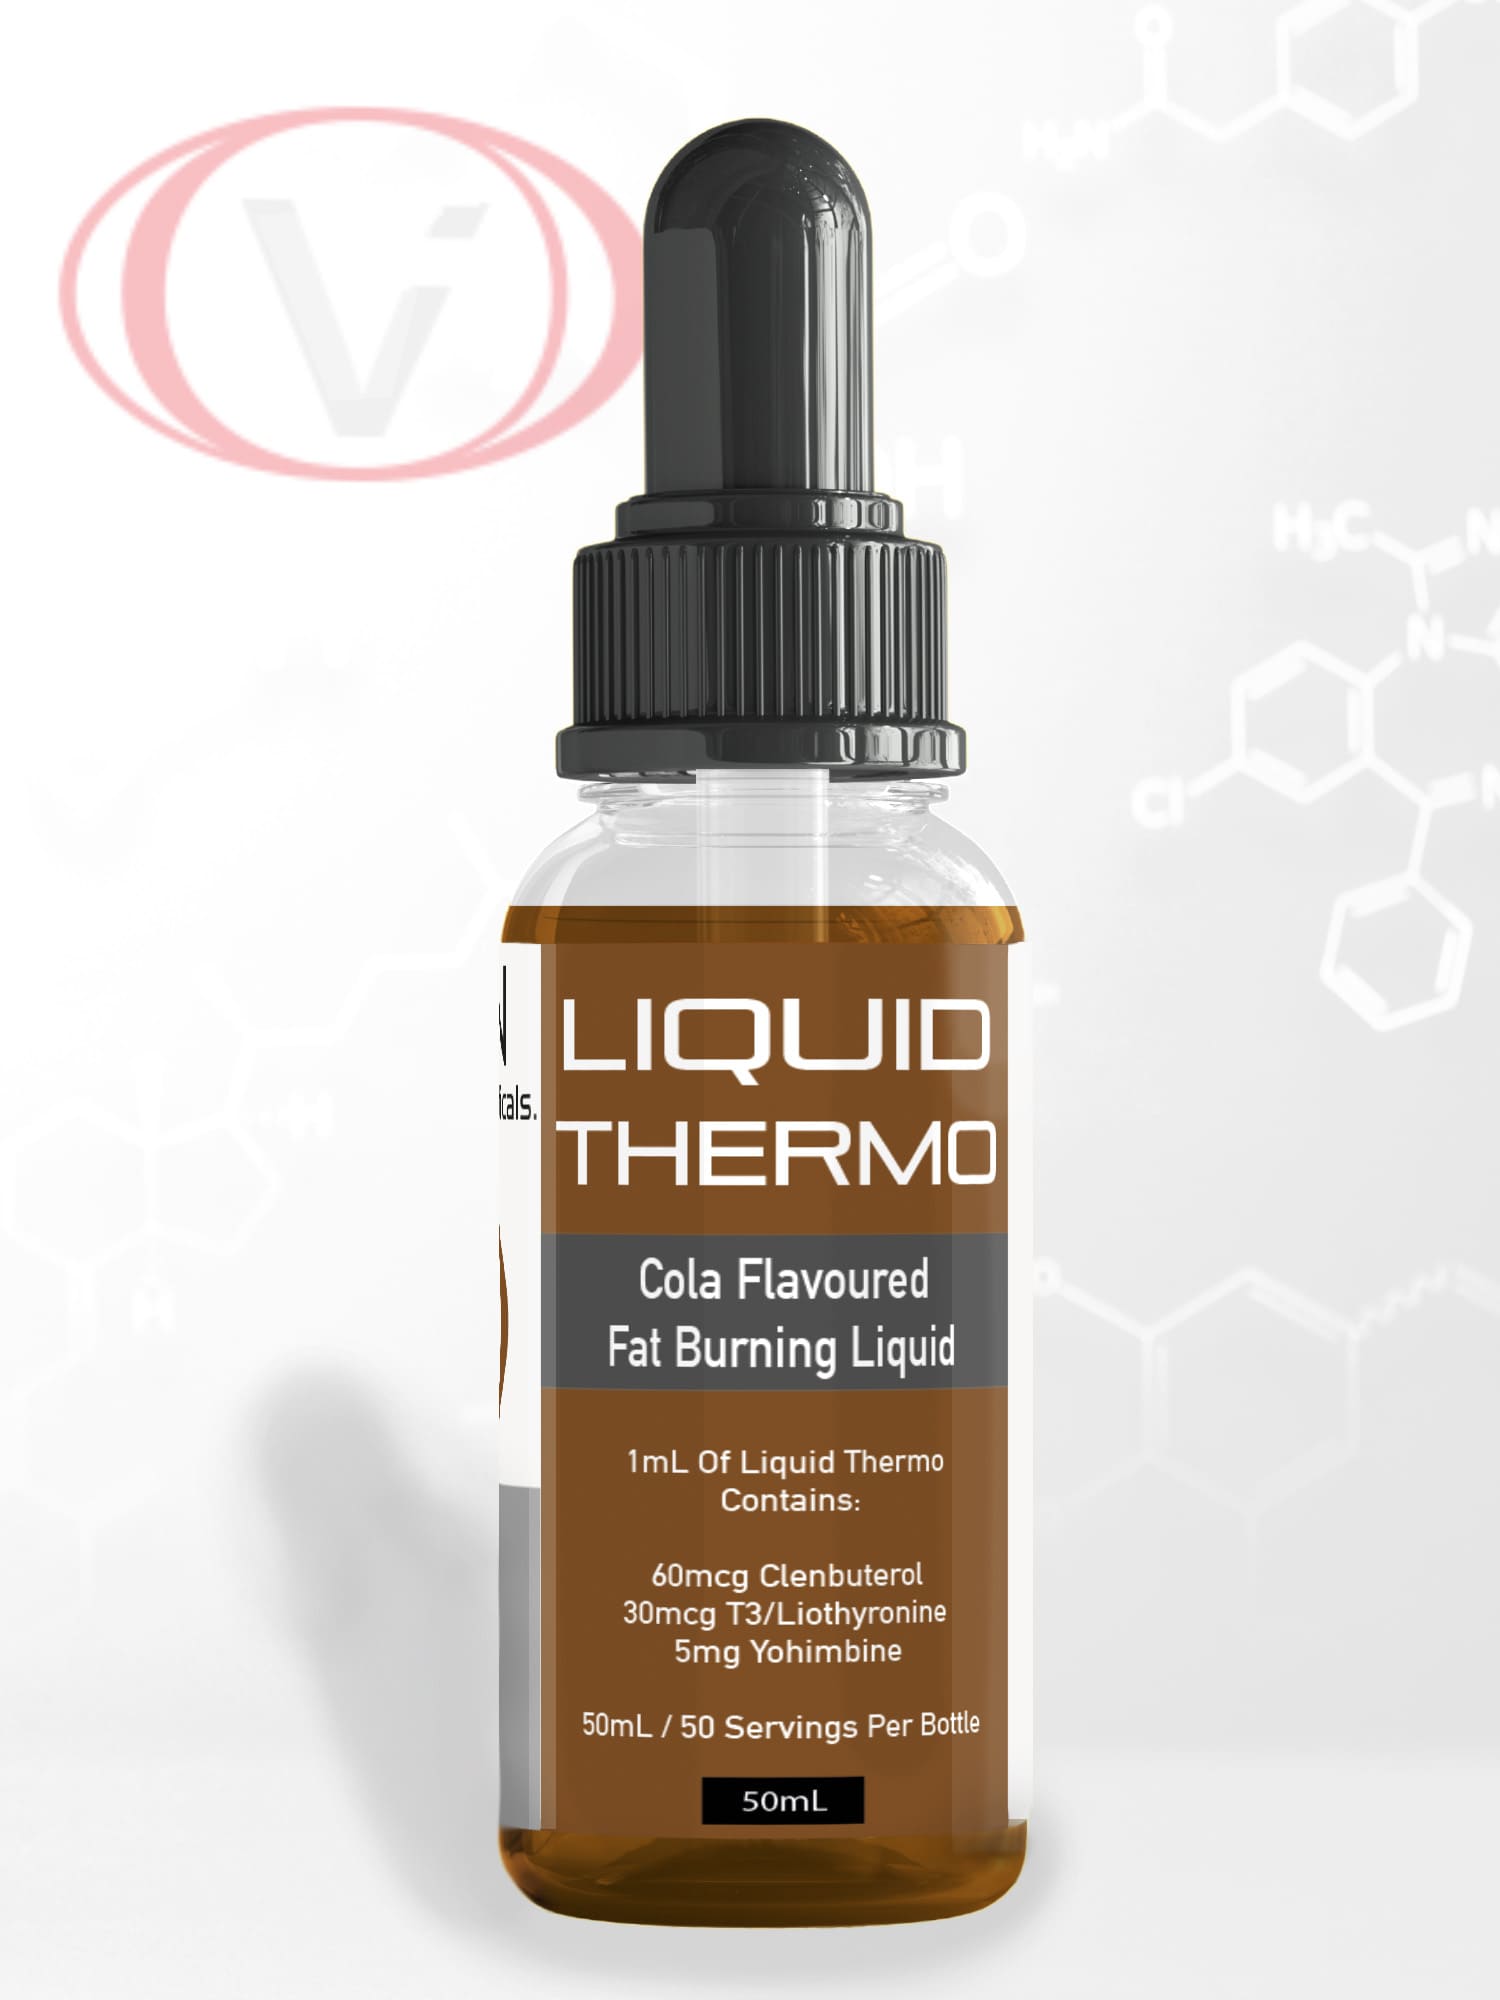 liquid thermo helios clenbuterol t3 yohimbine 50ml cola flavour